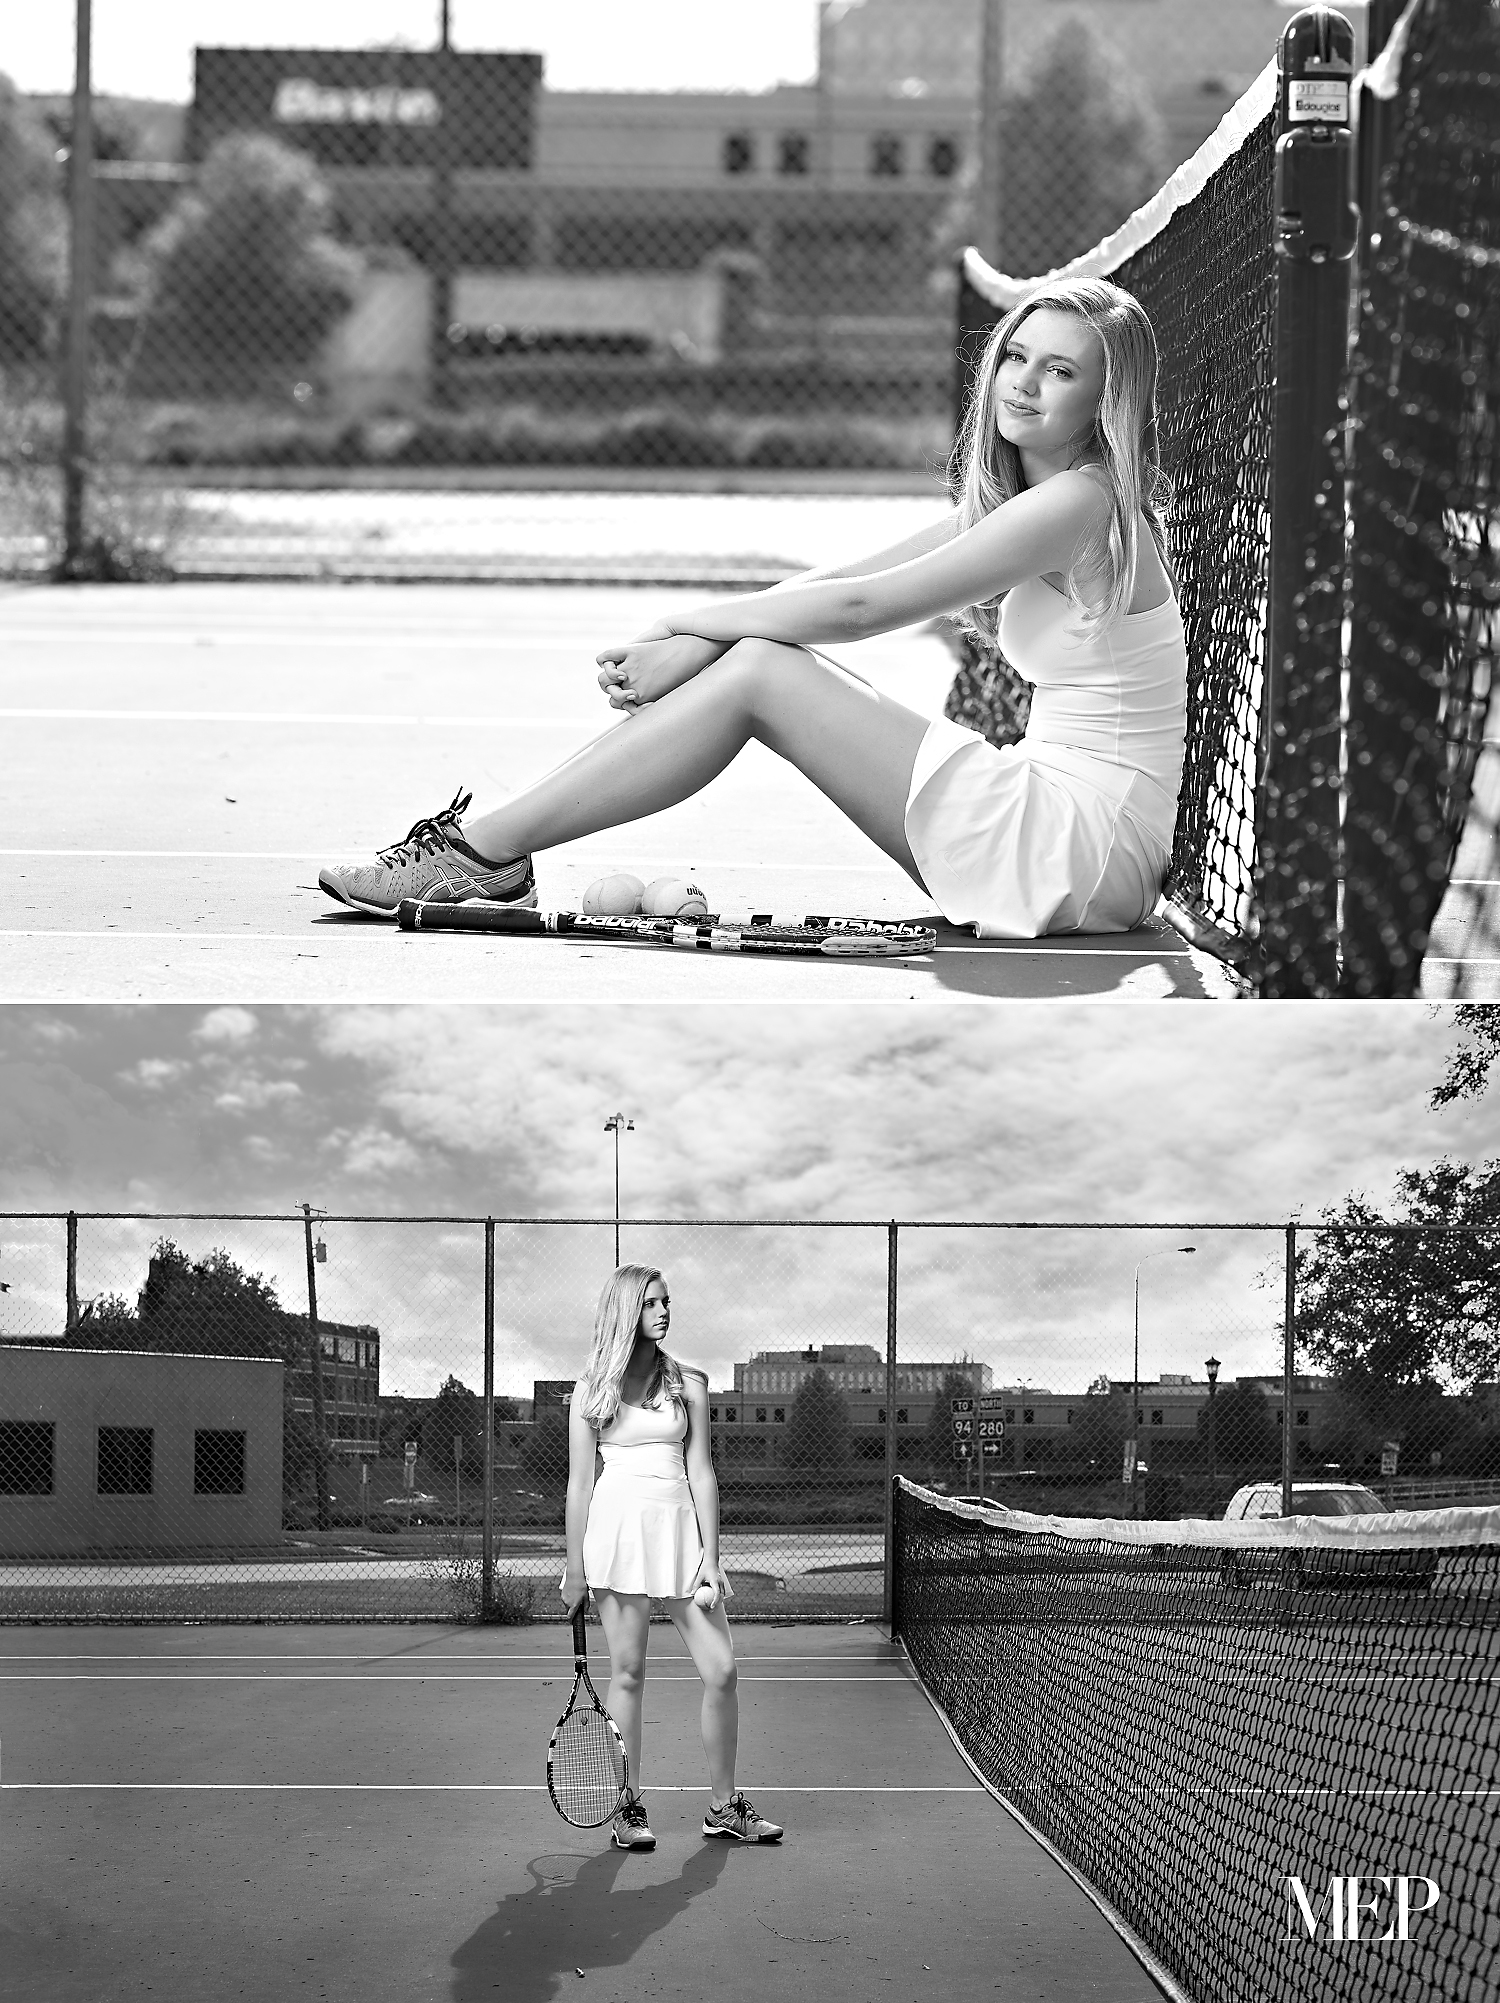 Senior-portrait-photographer-golf-tennis-sports-twin-cities